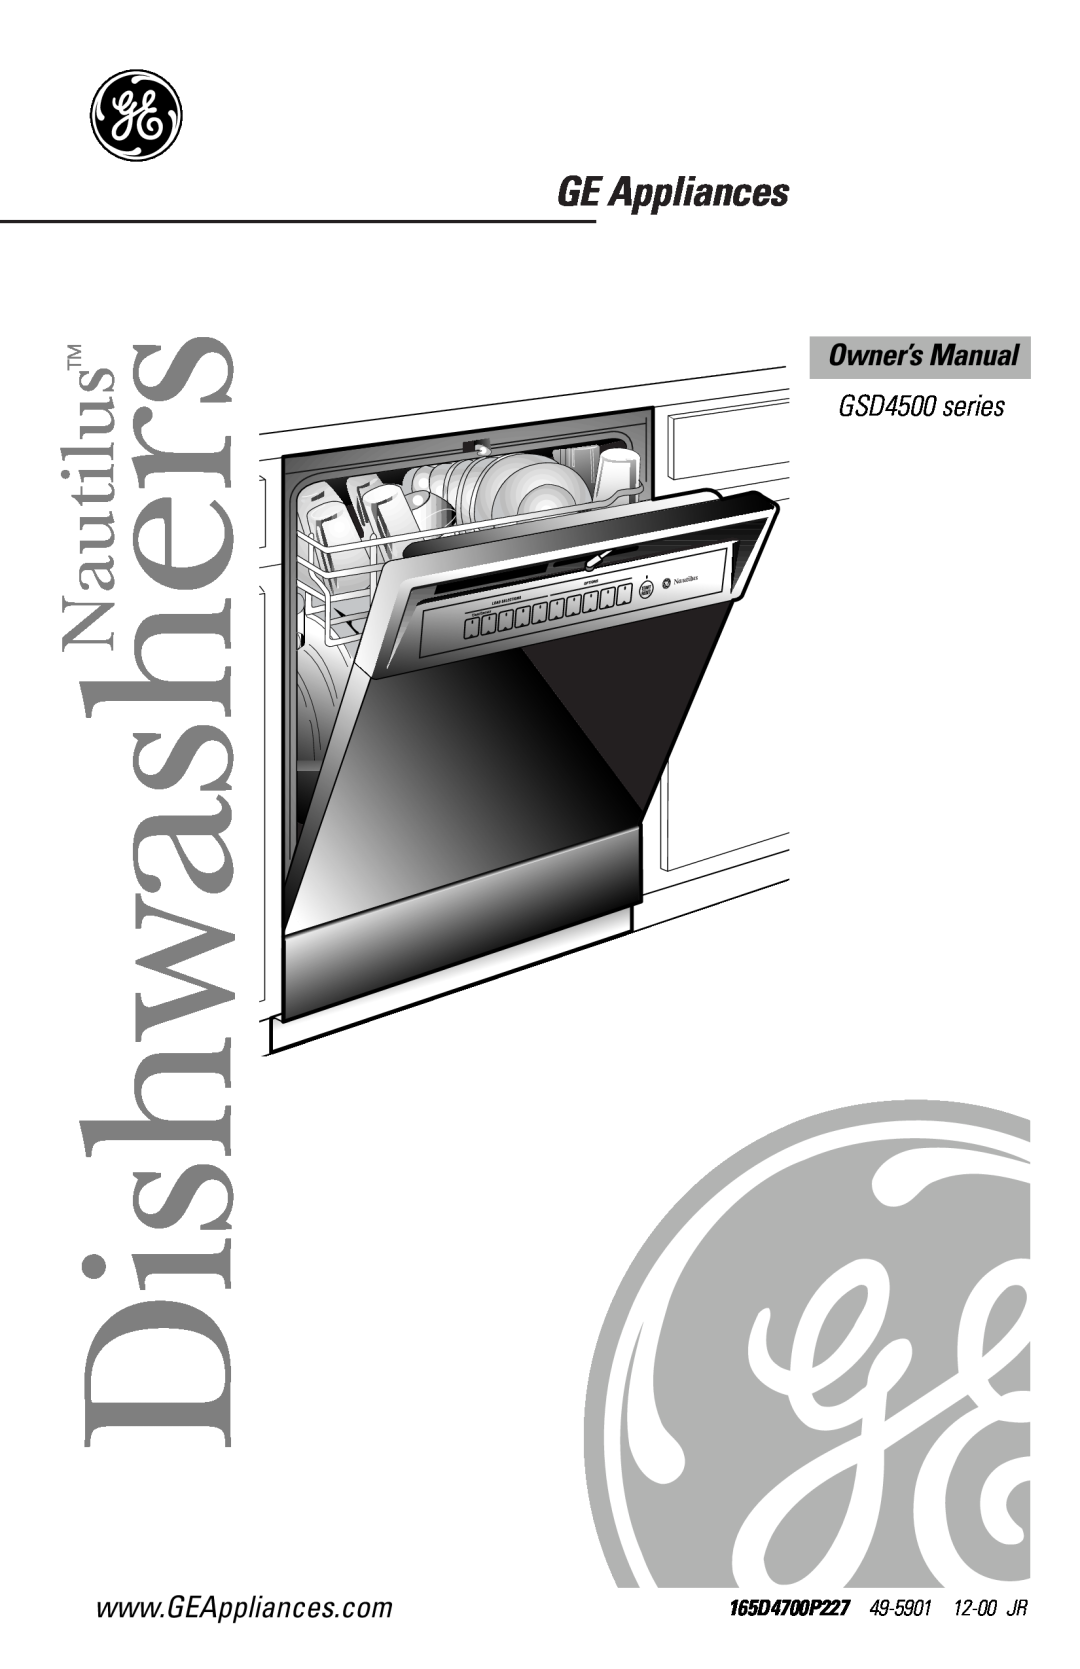 GE 165D4700P227 owner manual GE Appliances, Owner’s Manual, GSD4500 series, DishwashersNautilus 